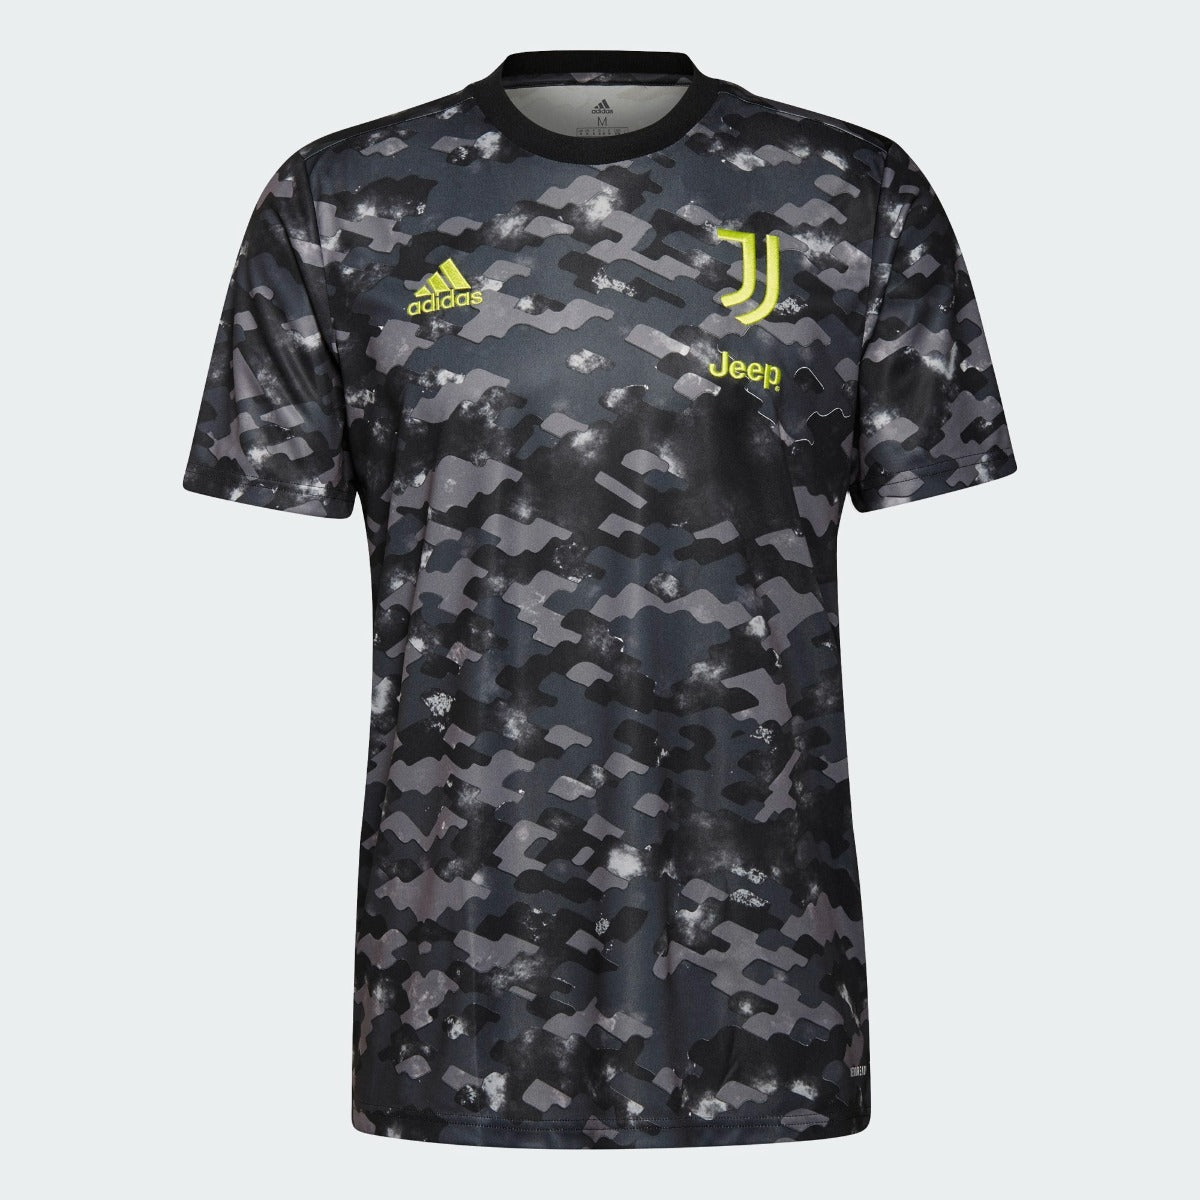 Adidas, Adidas 2021-22 Juventus Maglia pre-partita - Camo